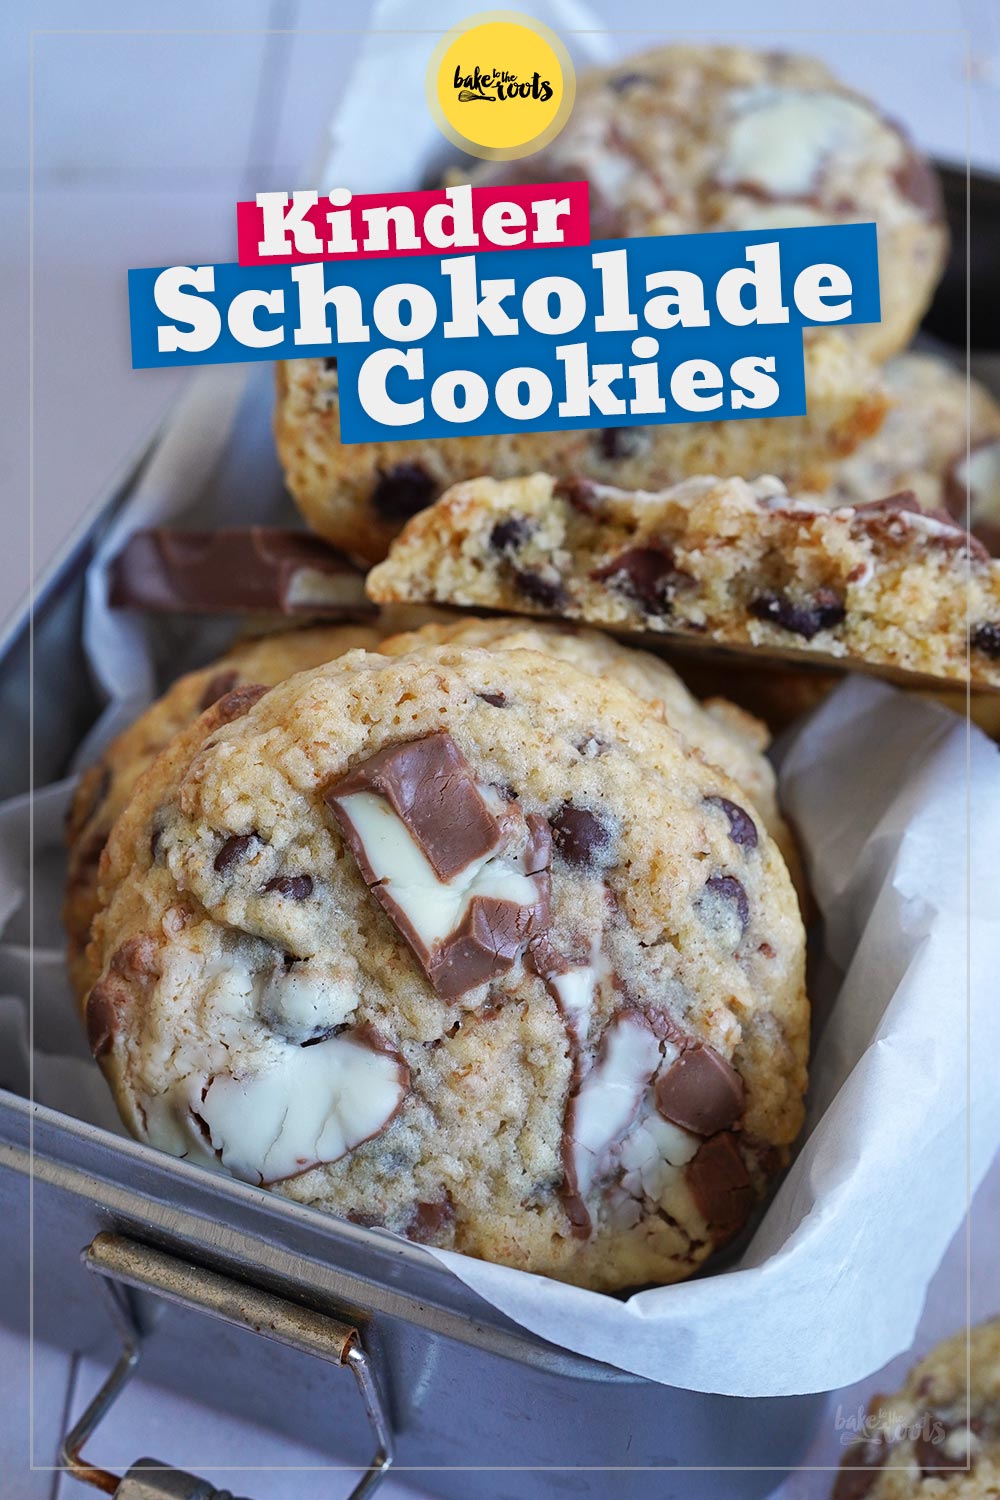 Kinder Schokolade Haferflocken Cookies | Bake to the roots